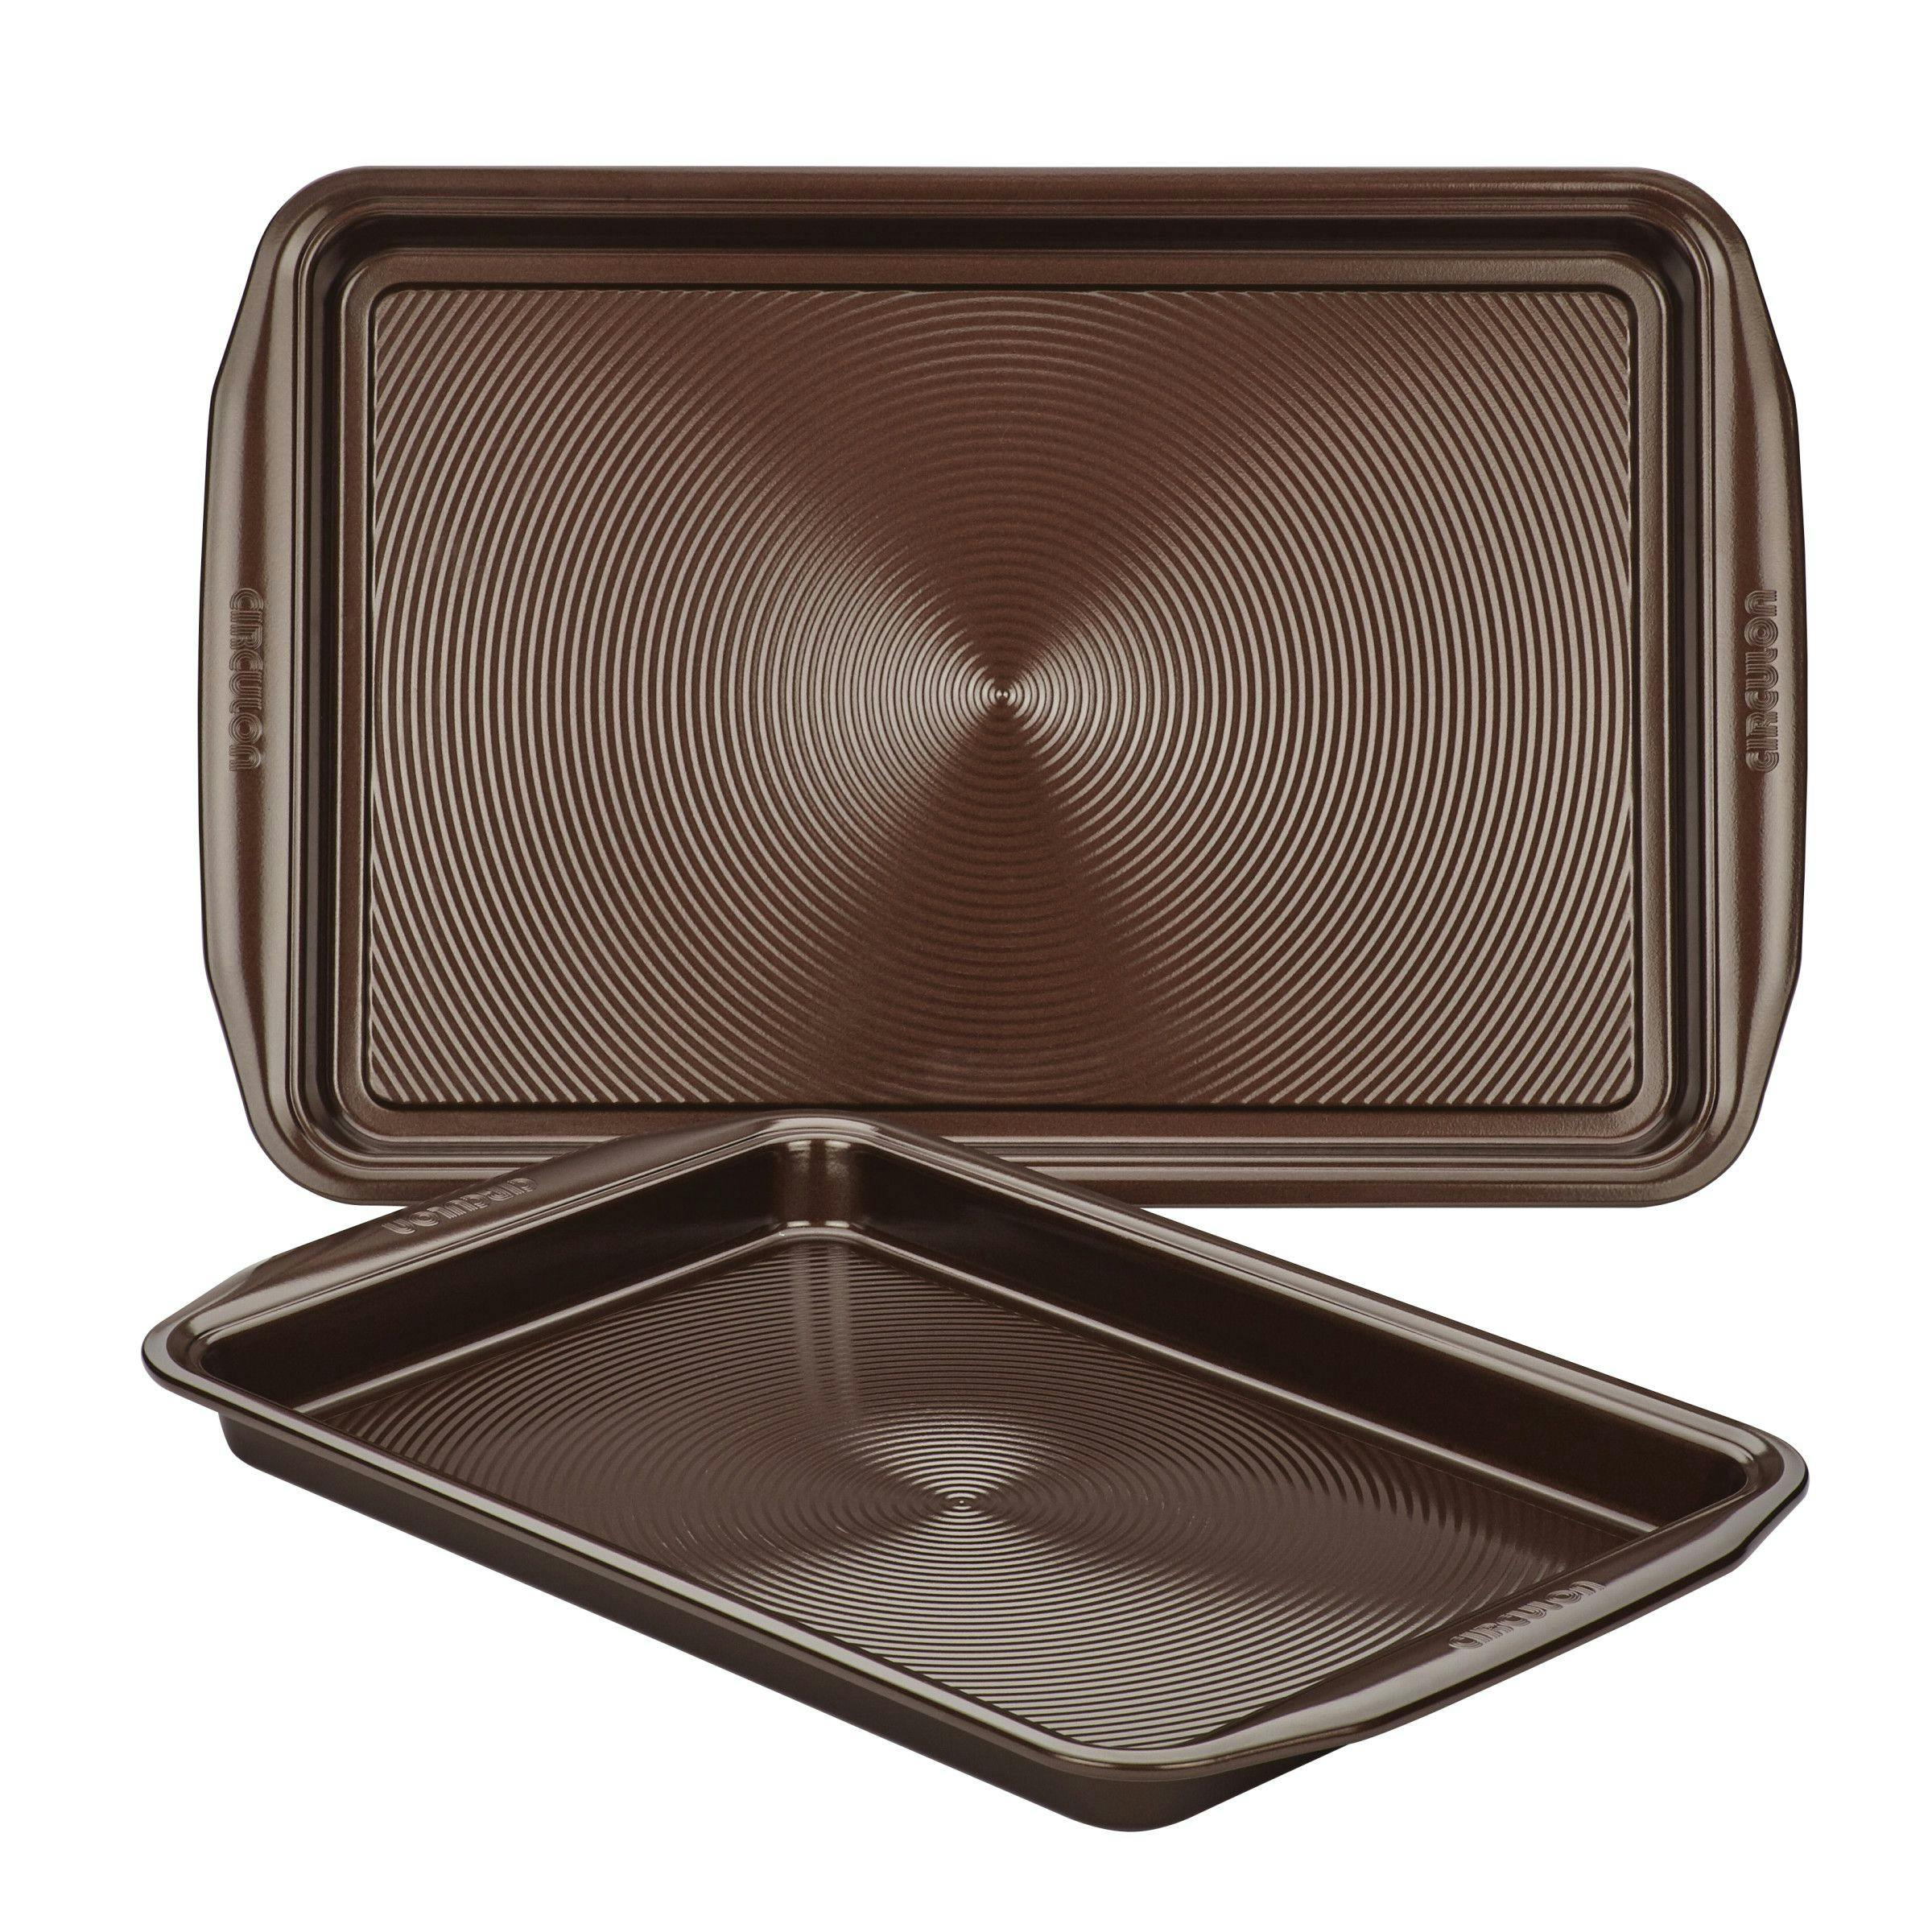 Circulon Bakeware Nonstick Cookie Pan Set, 2-Pieces, Chocolate Brown